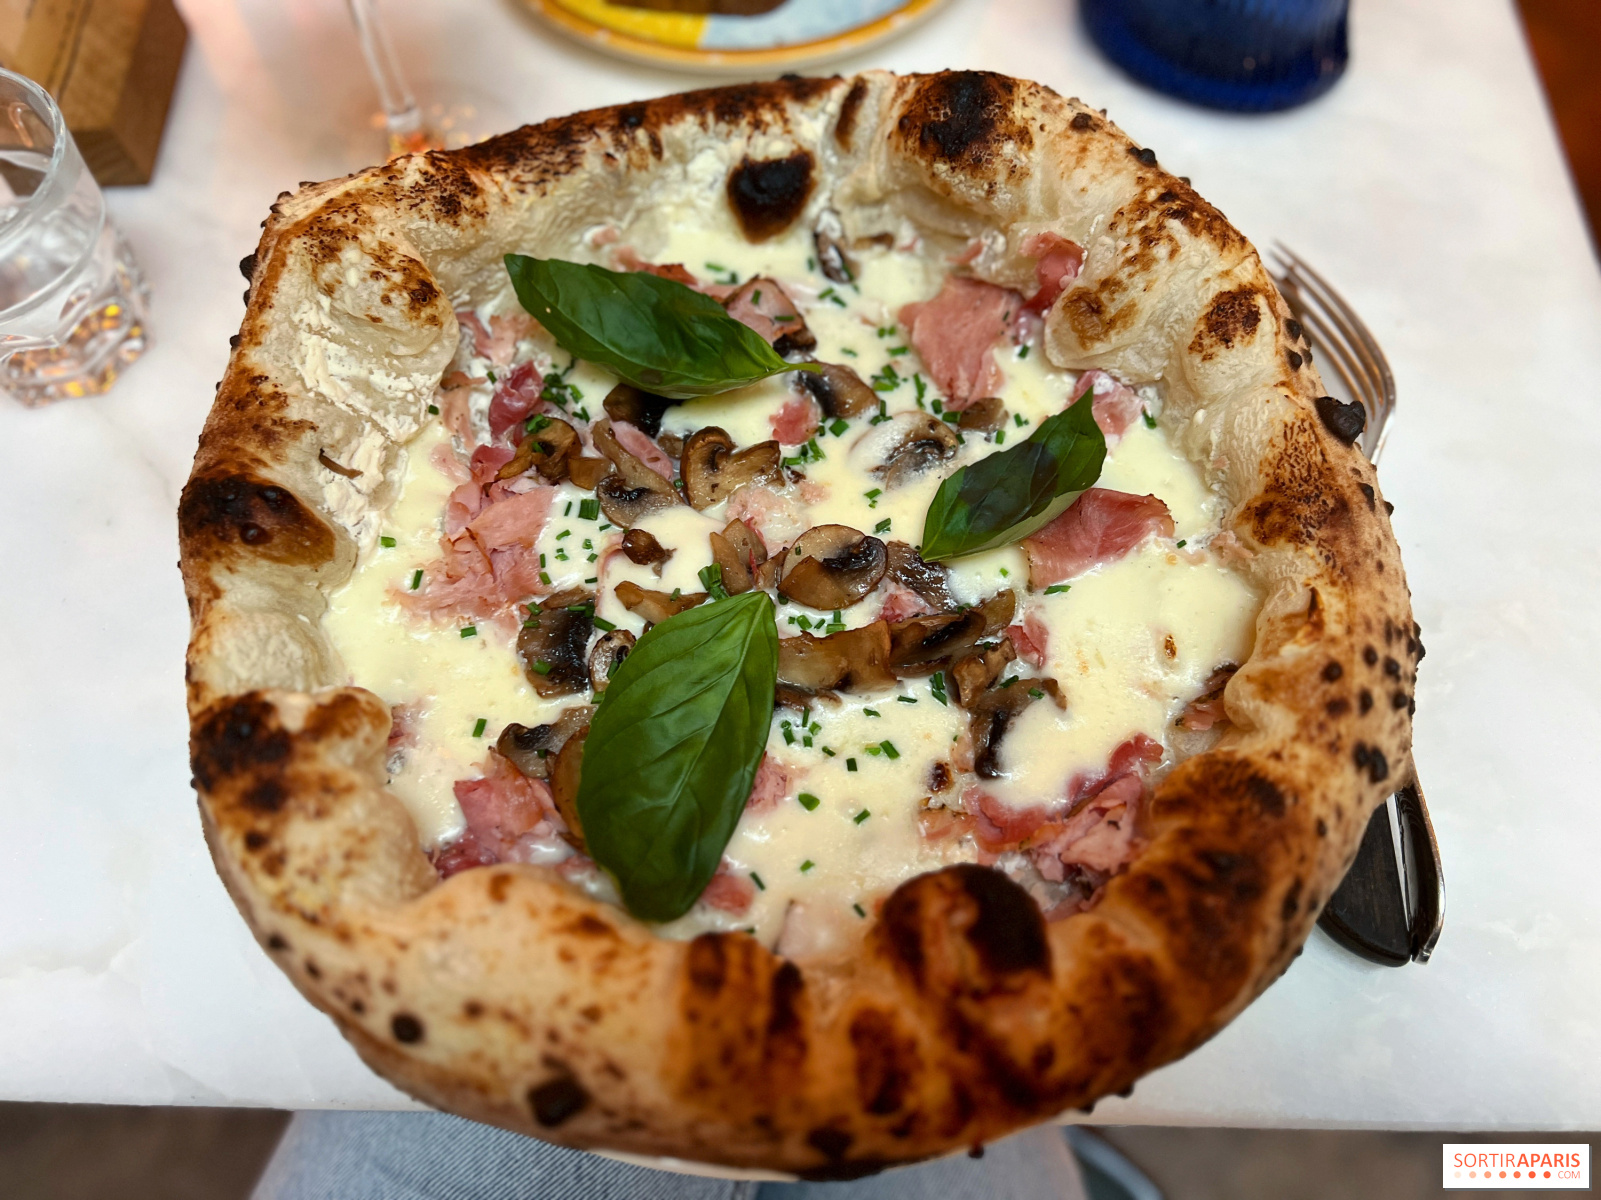 Riviera Pizza (@riviera.pizza) • Instagram photos and videos